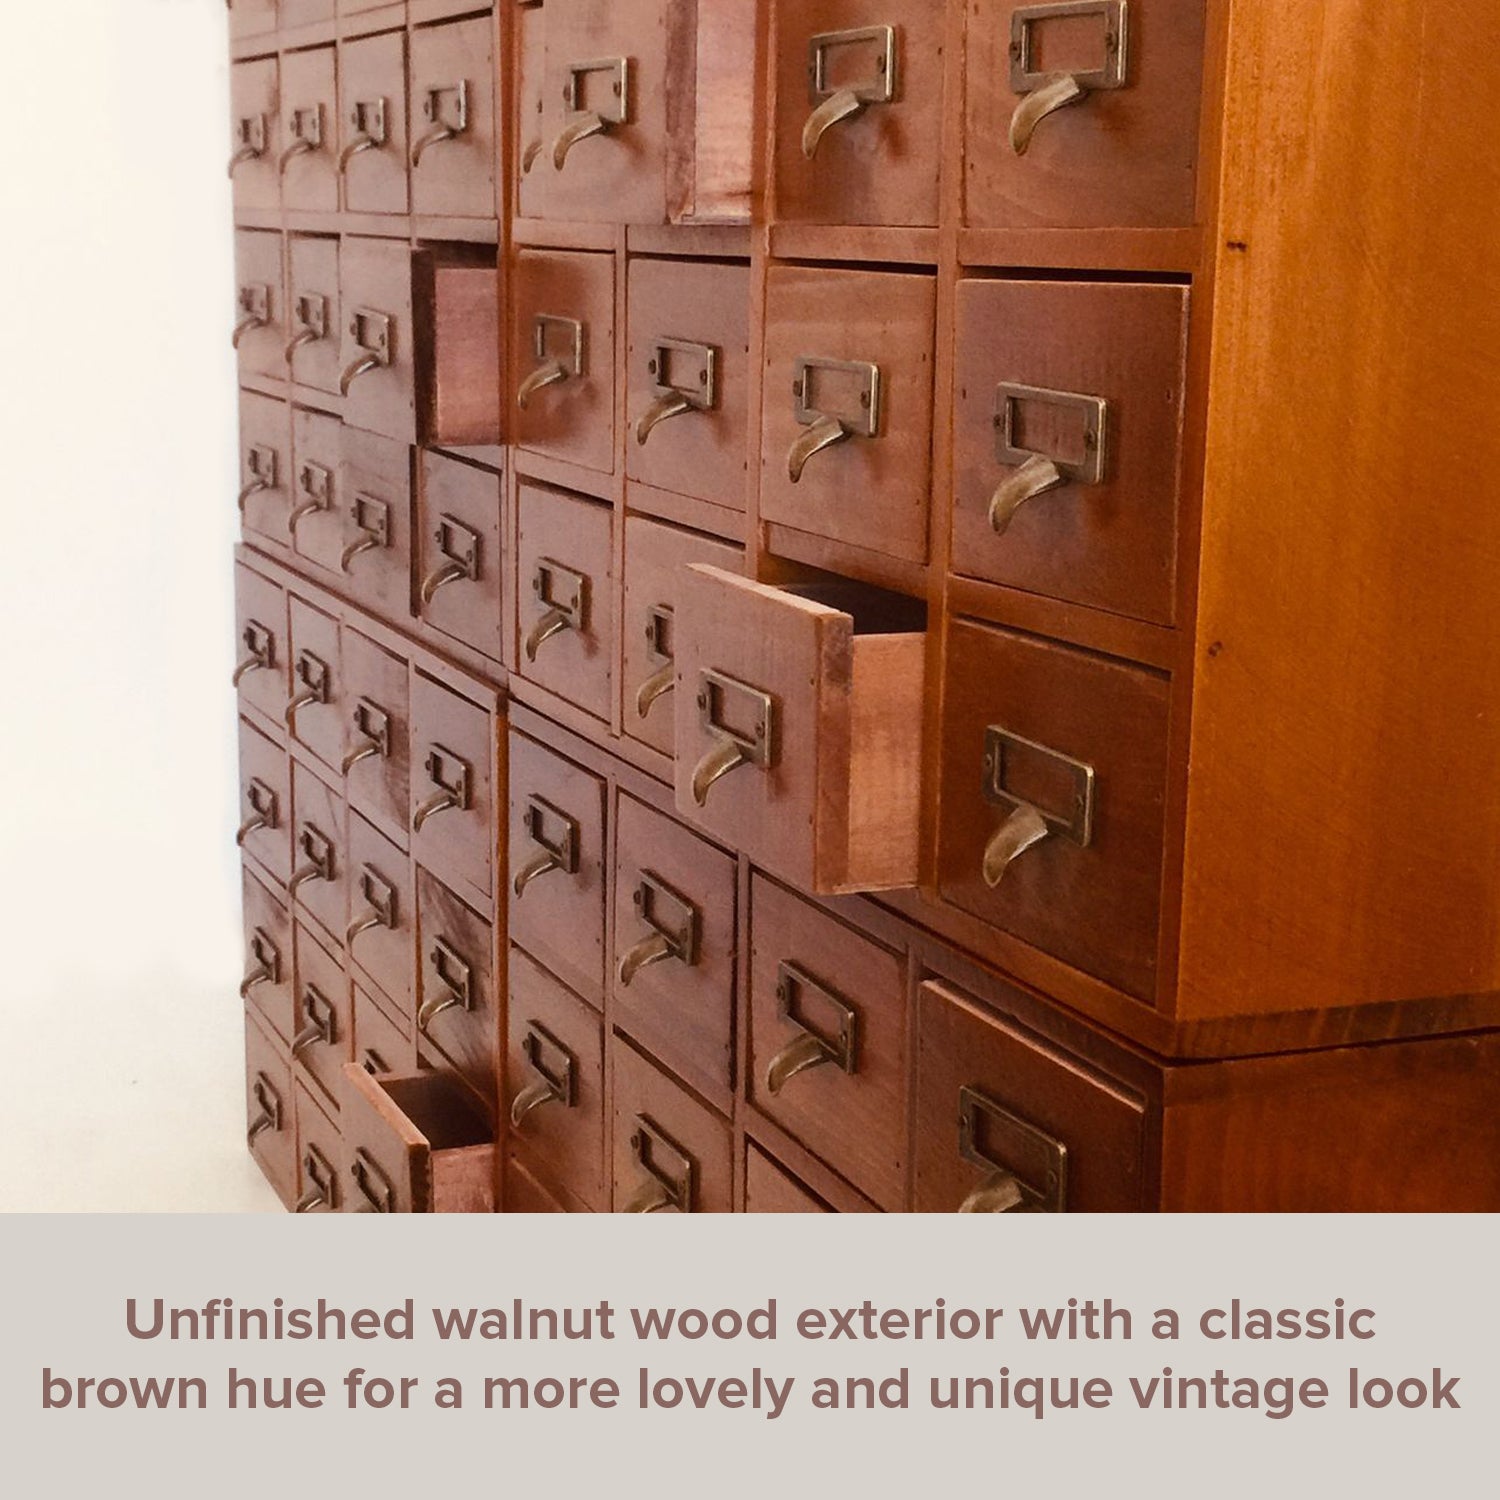 Vintage Library Desk Drawer Organizer - Wooden Storage Box with 16 Drawers  USA